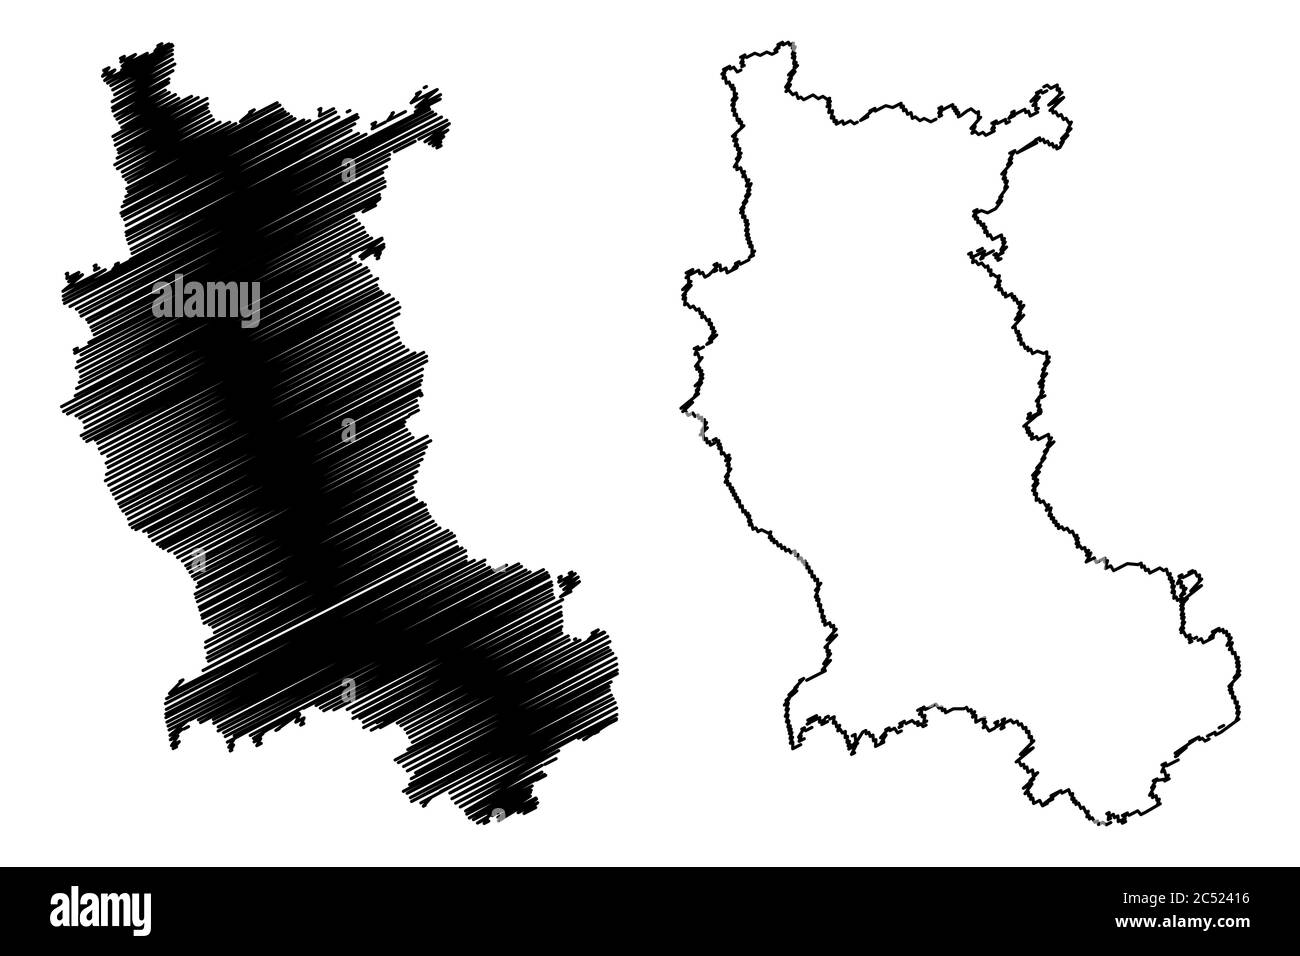 Département Loire (Frankreich, Frankreich, Republik Frankreich, Region Auvergne-Rhone-Alpes, ARA) Karte Vektorgrafik, Skizze Loire Karte Stock Vektor